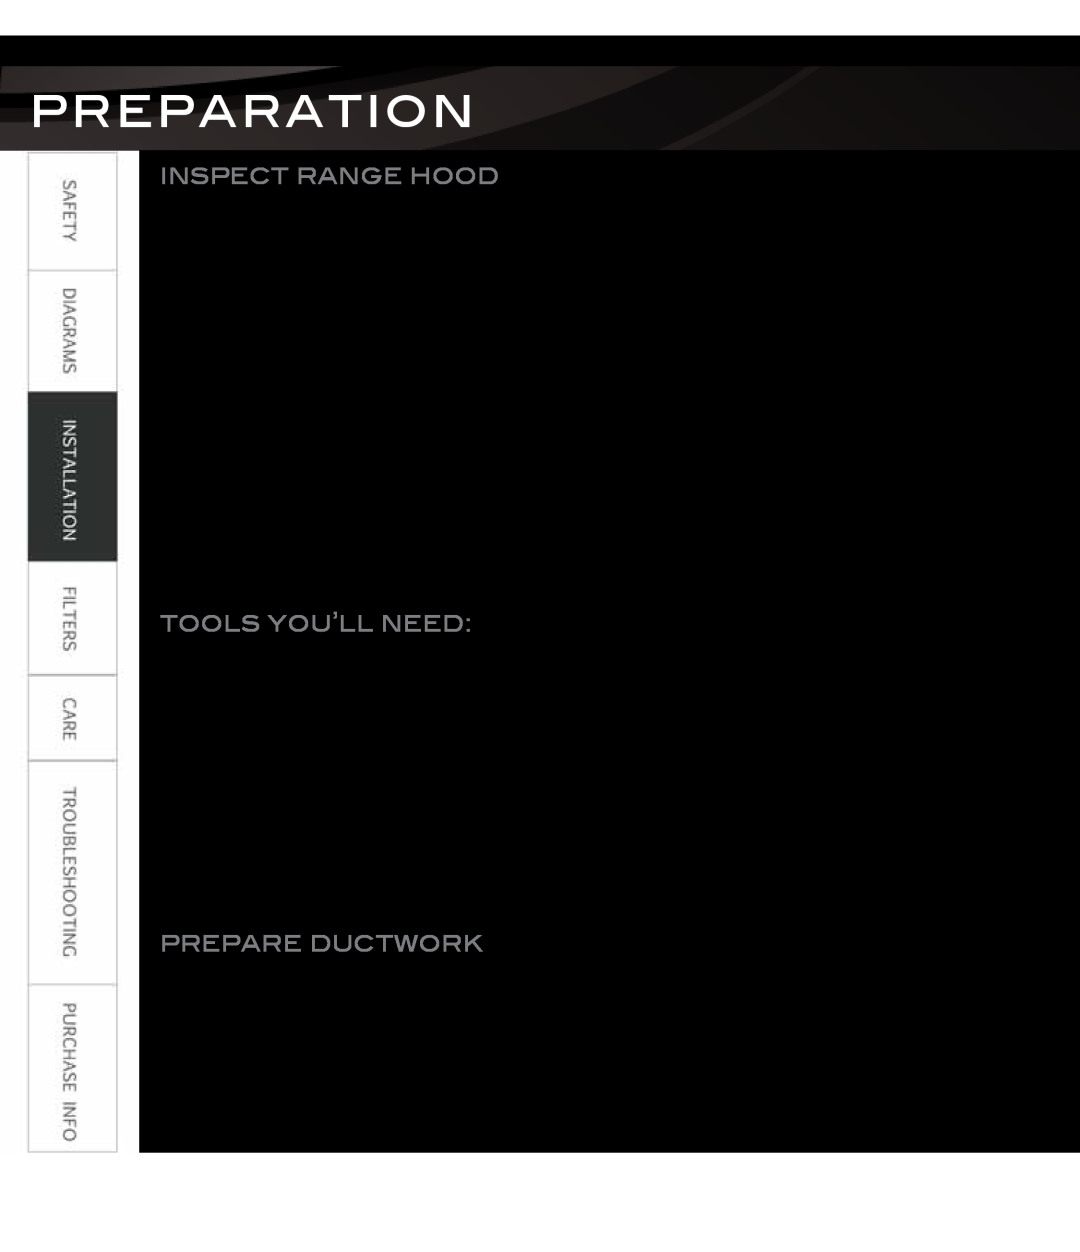 Proline PLS1570, PLS1576 Preparation, Inspect Range Hood, Tools You’Ll Need, Prepare Ductwork, Check contents of box, Test 